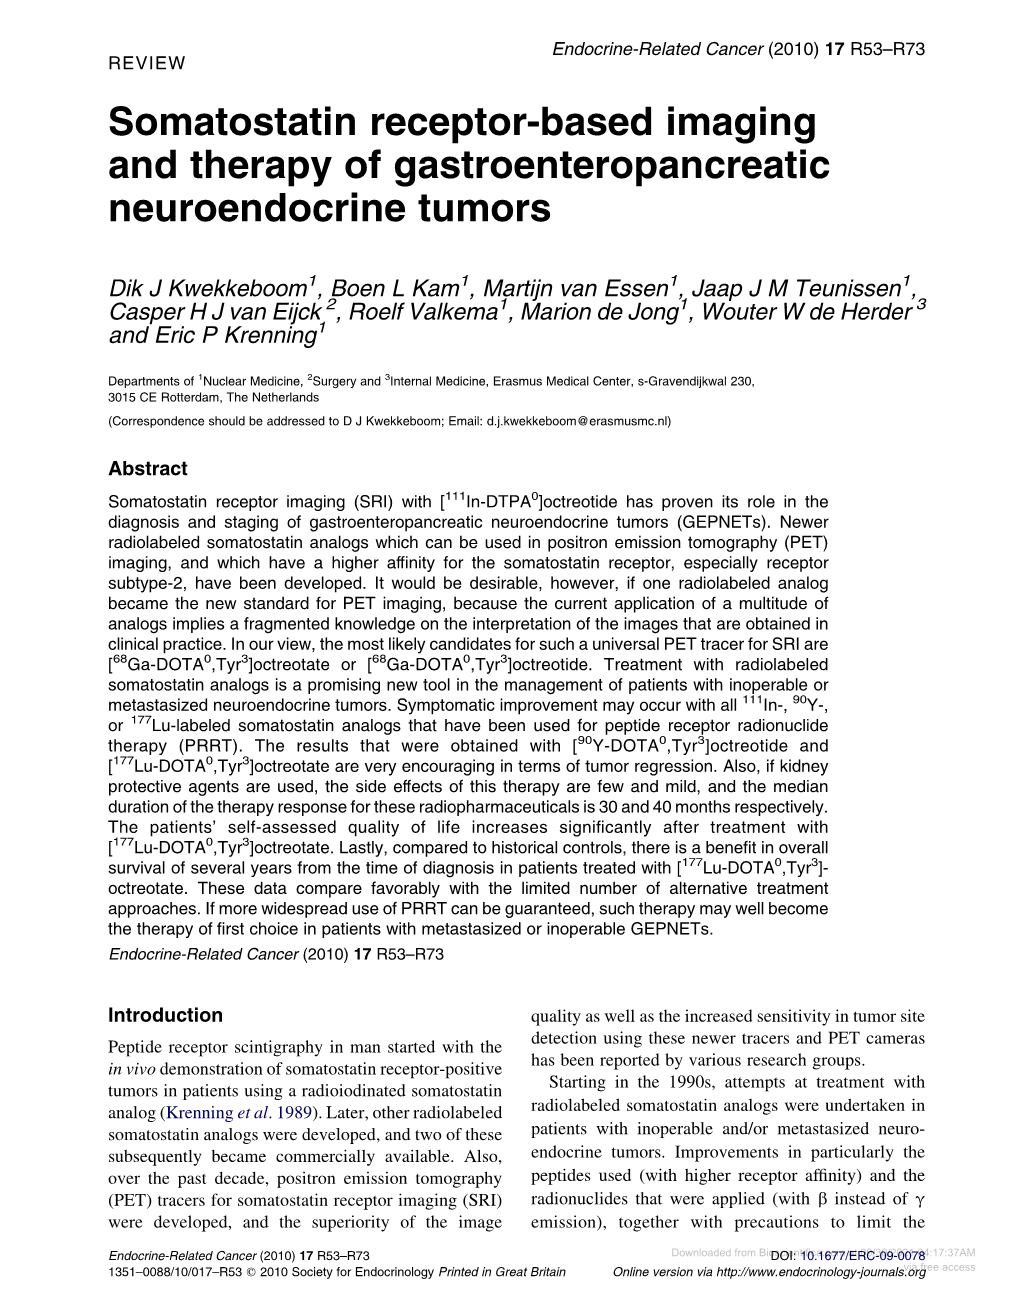 Somatostatin Receptor-Based Imaging and Therapy of Gastroenteropancreatic Neuroendocrine Tumors